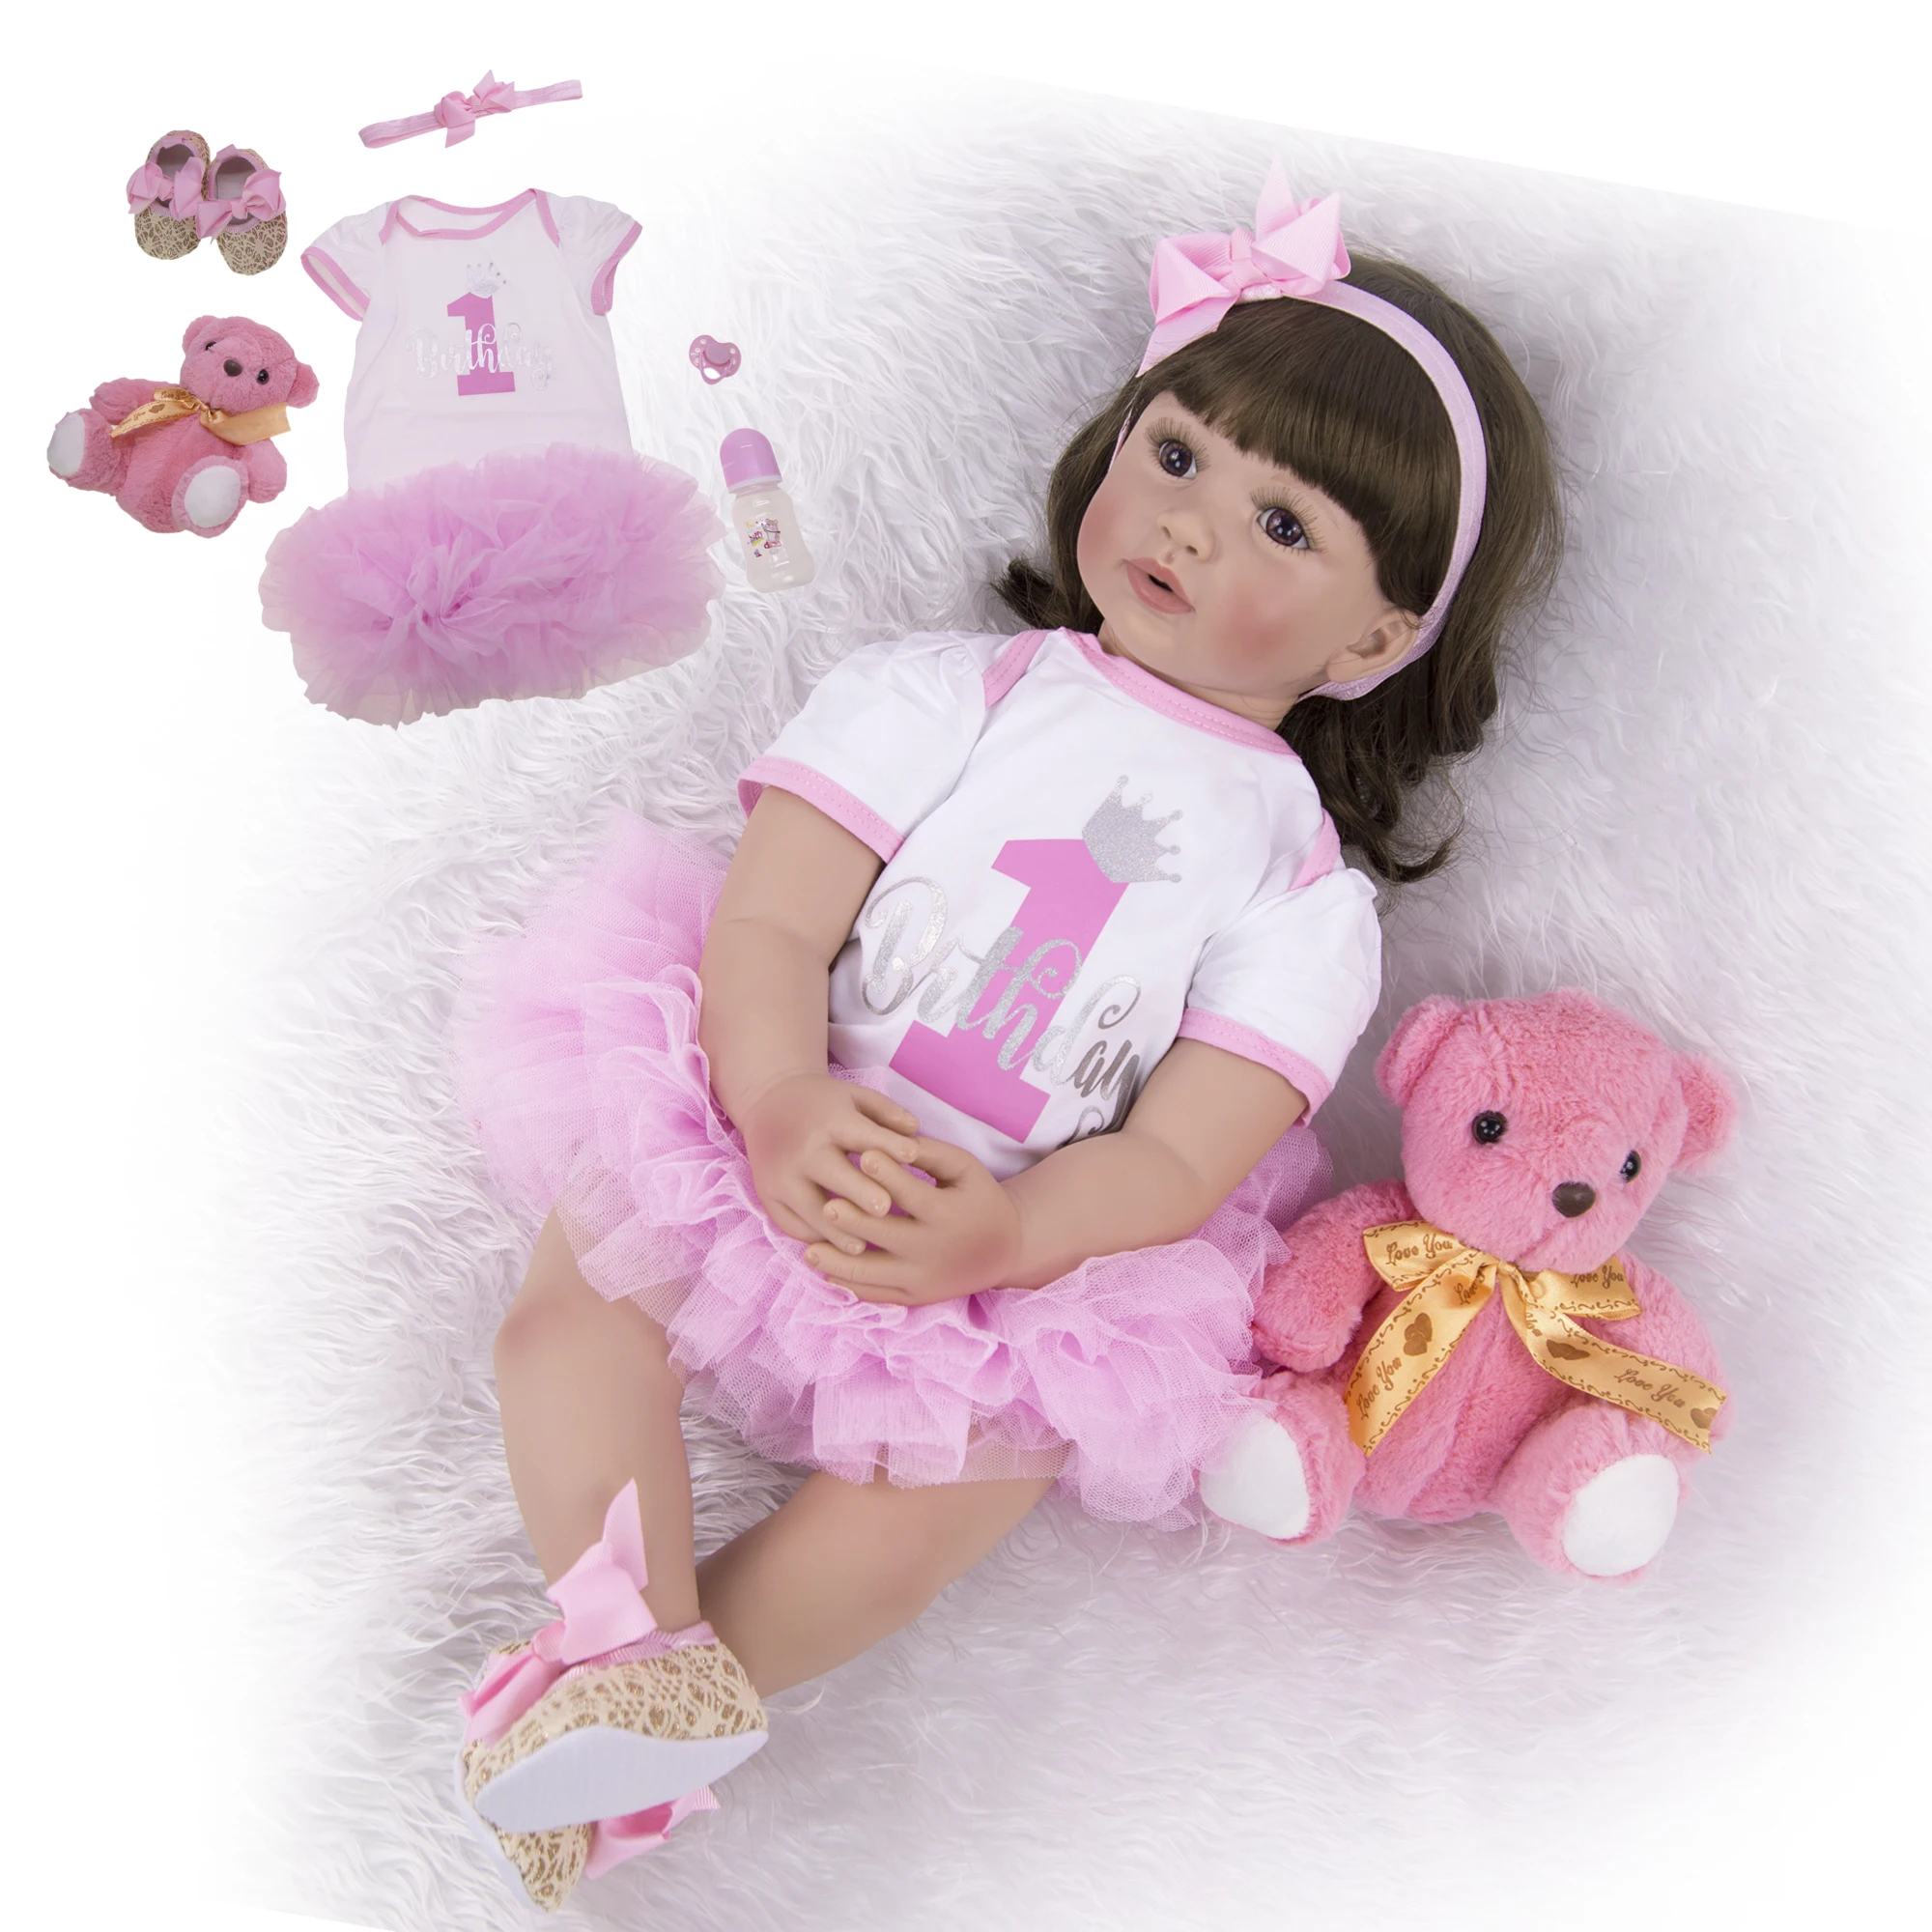 

KIEUMI 24 Inch Silicone Reborn Baby Dolls 60 cm Models Lifelike Princess Reborn Menina For Kids Birthday Party Gifts Playmates